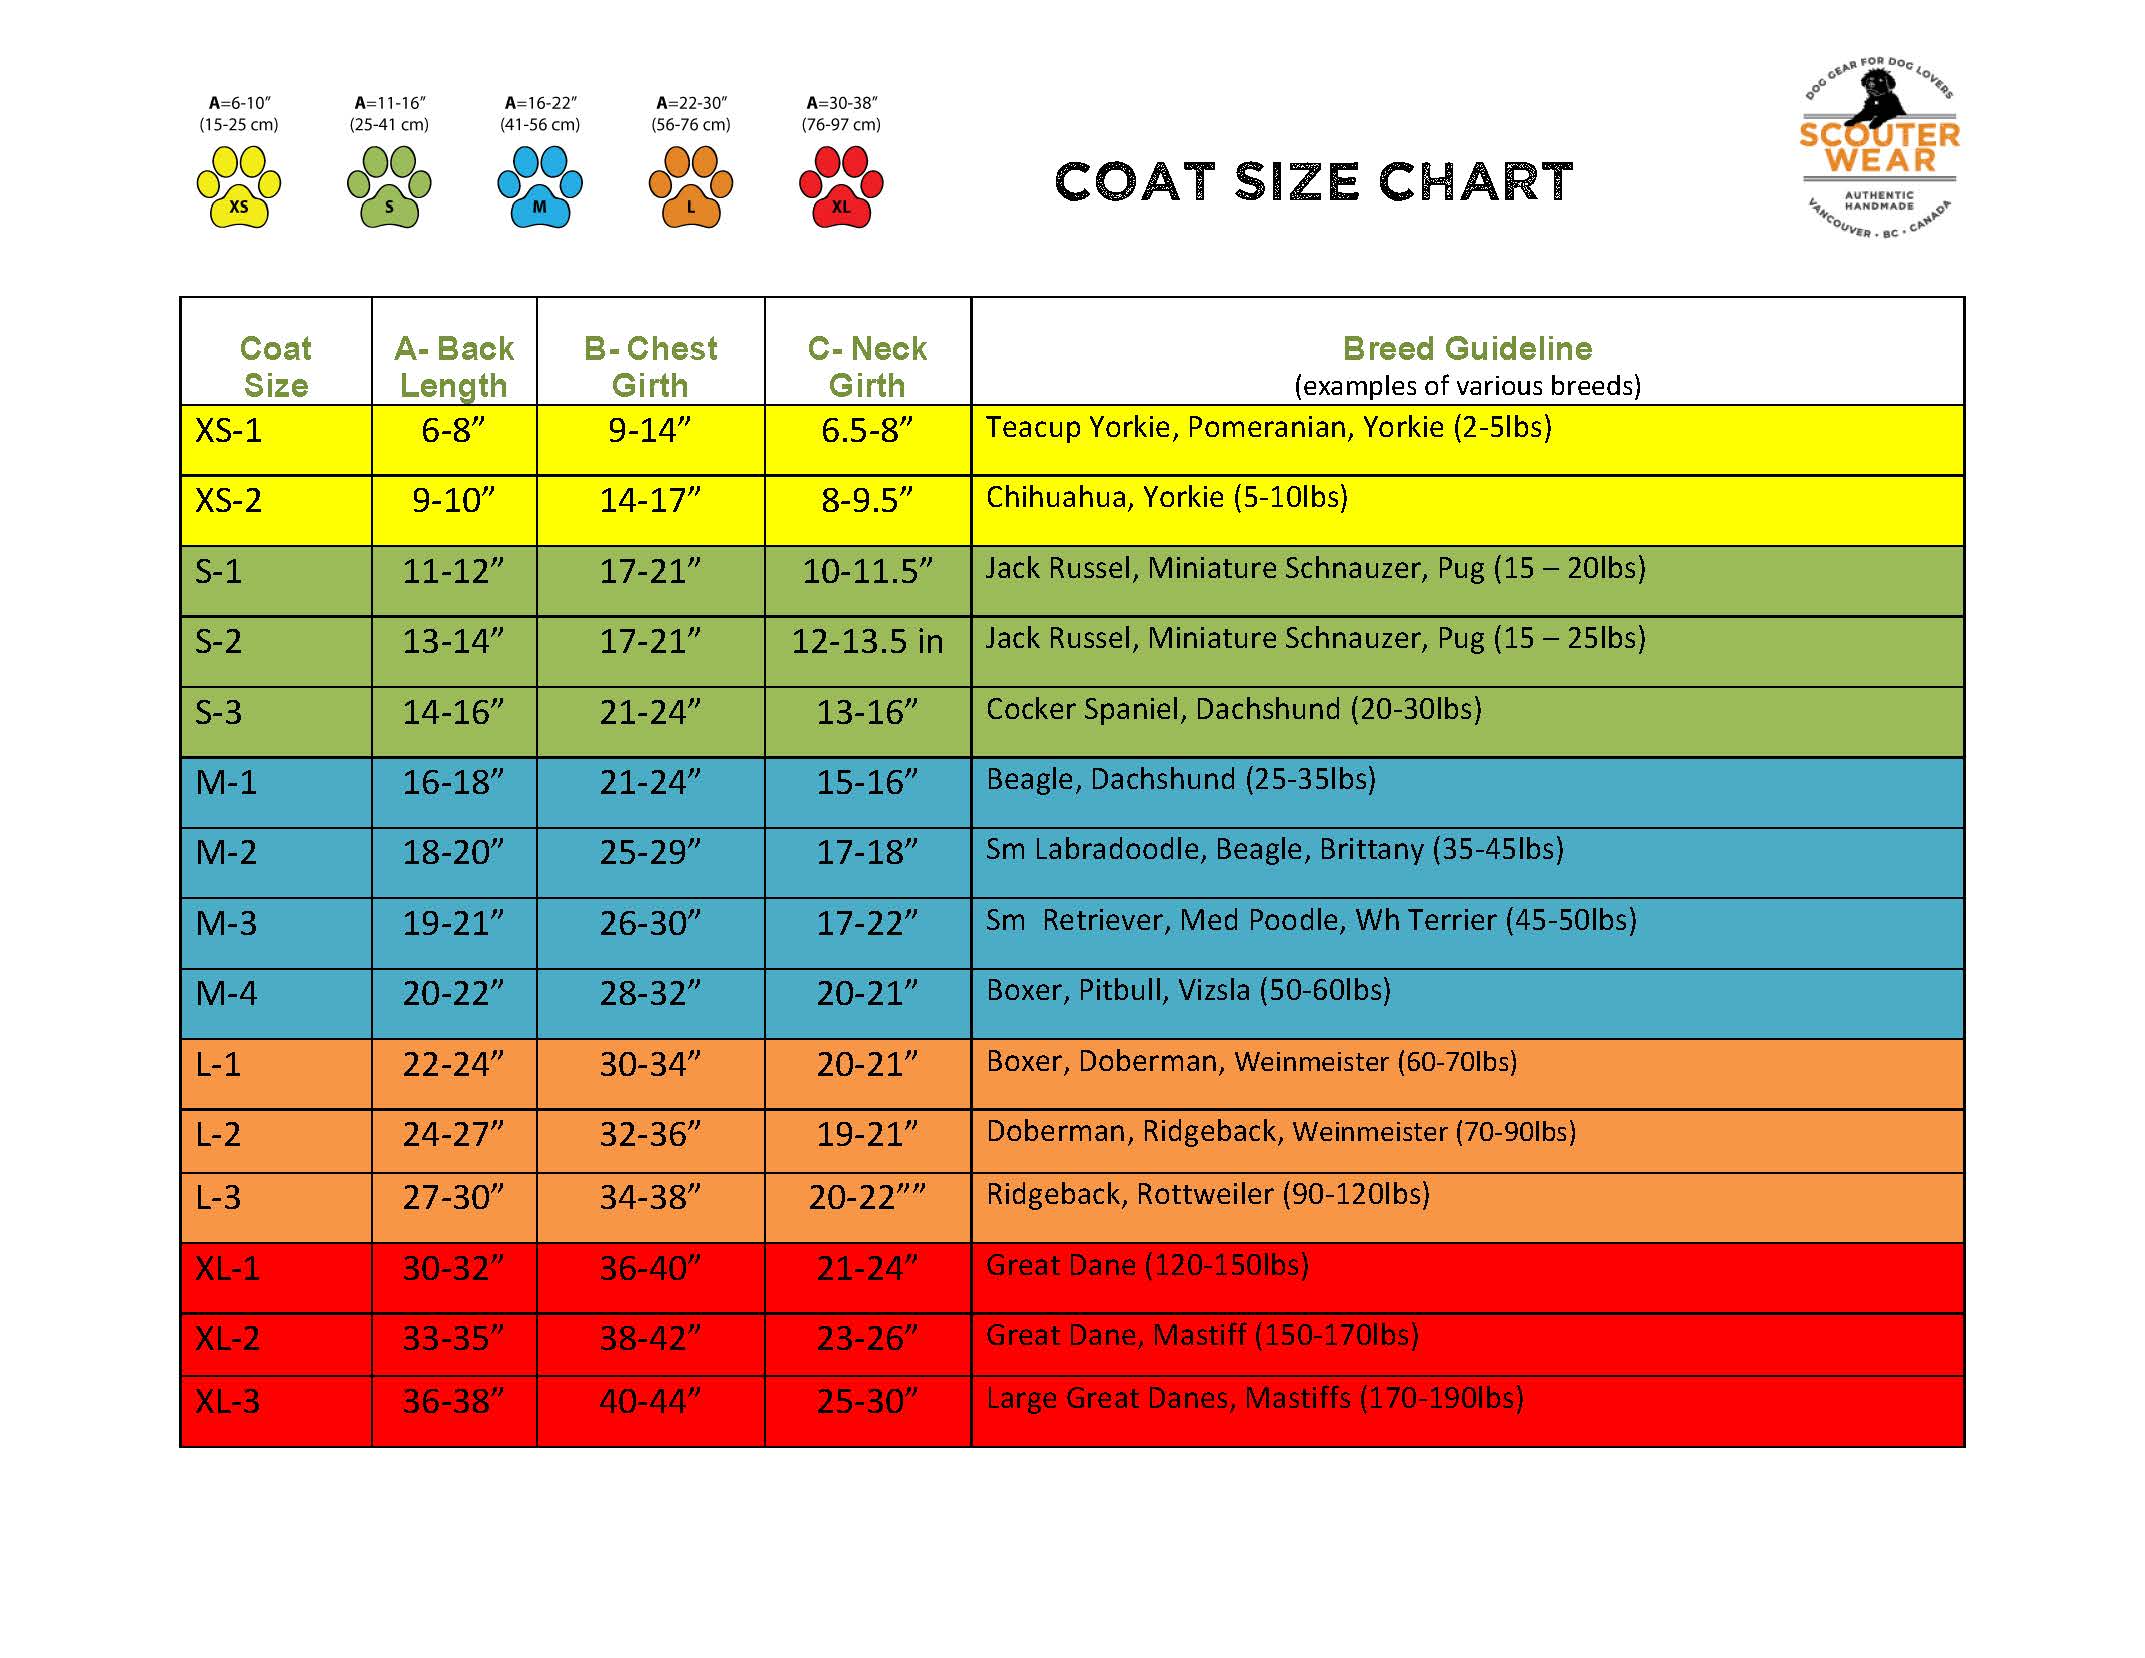 Scouter Wear coat sizing chart